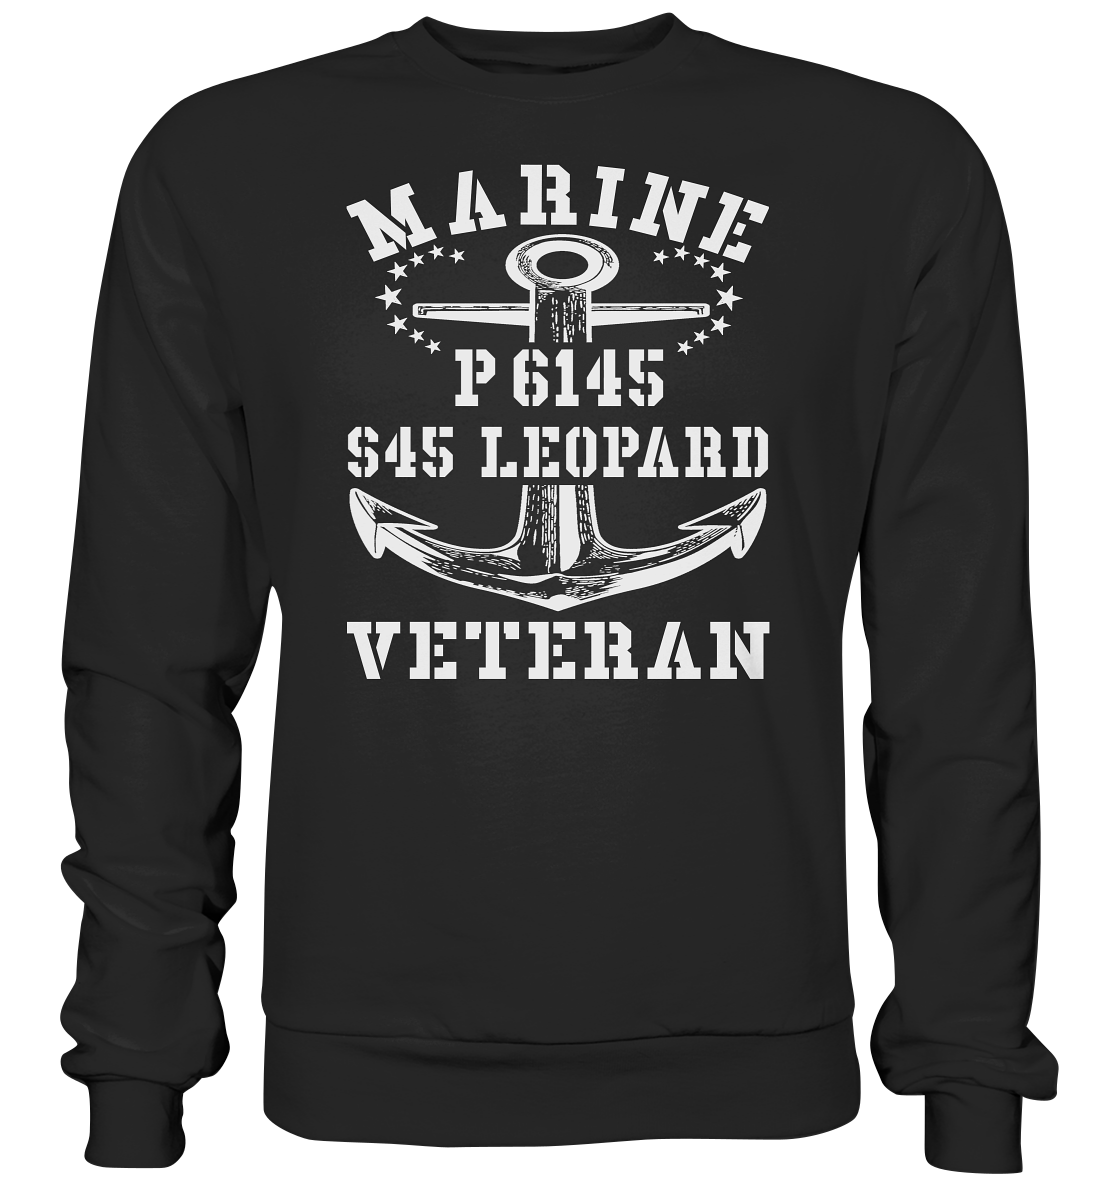 P6145 S45 LEOPARD Marine Veteran - Premium Sweatshirt